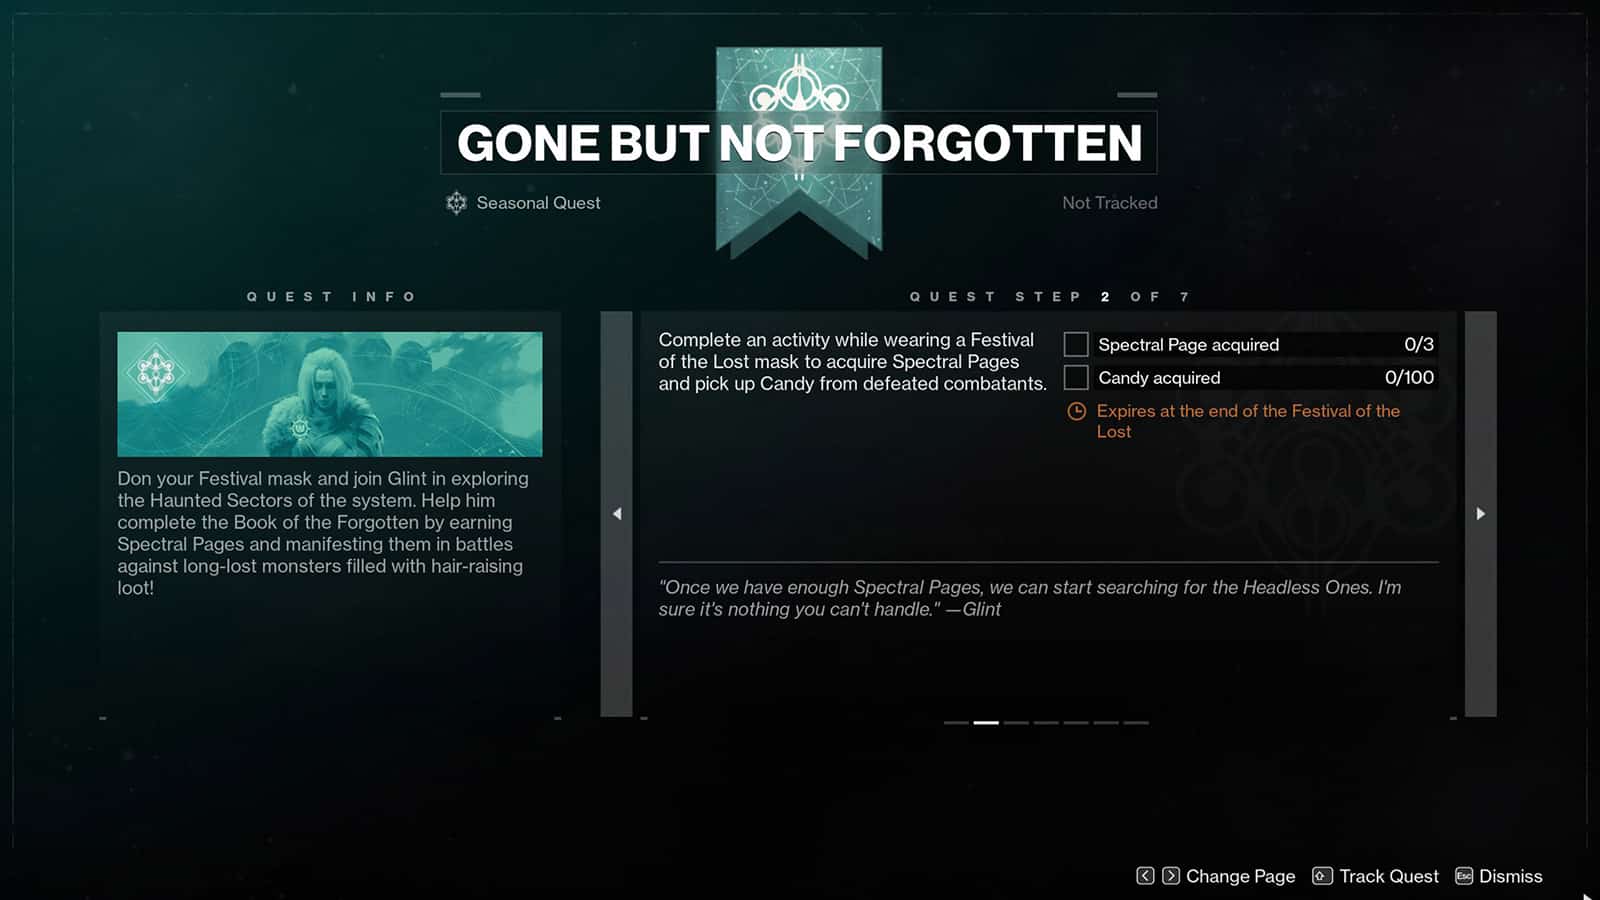 Destiny 2 Gone but not Forgotten quest